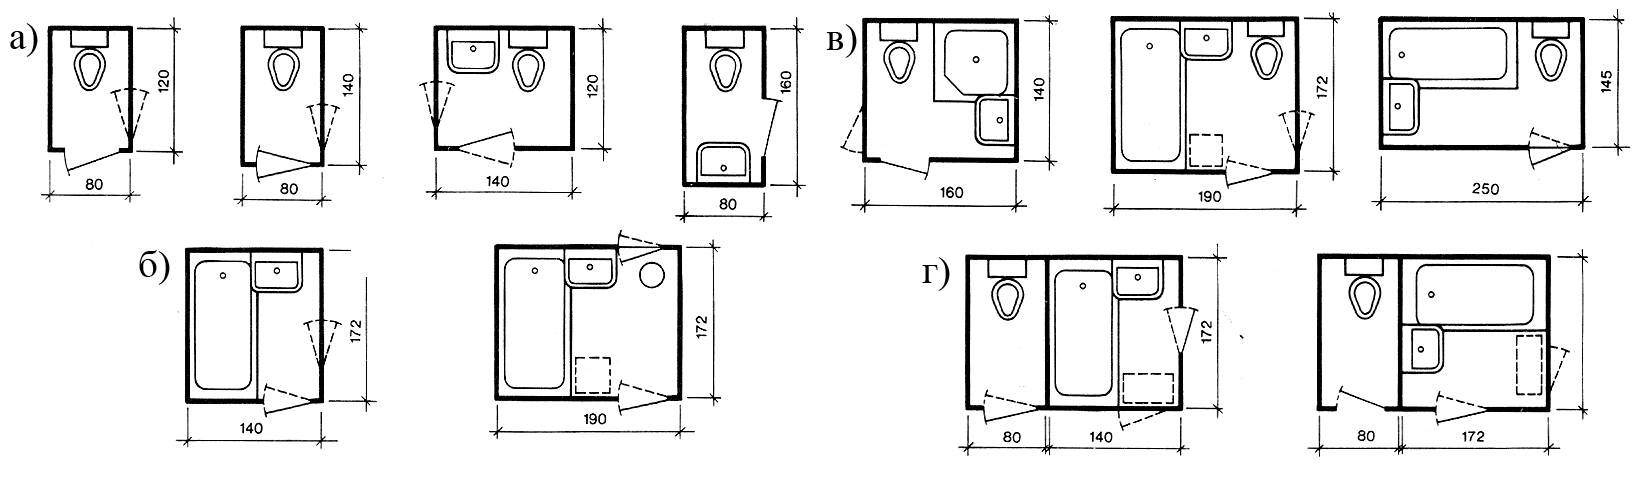 Санузел 3м2 с туалетом планировка